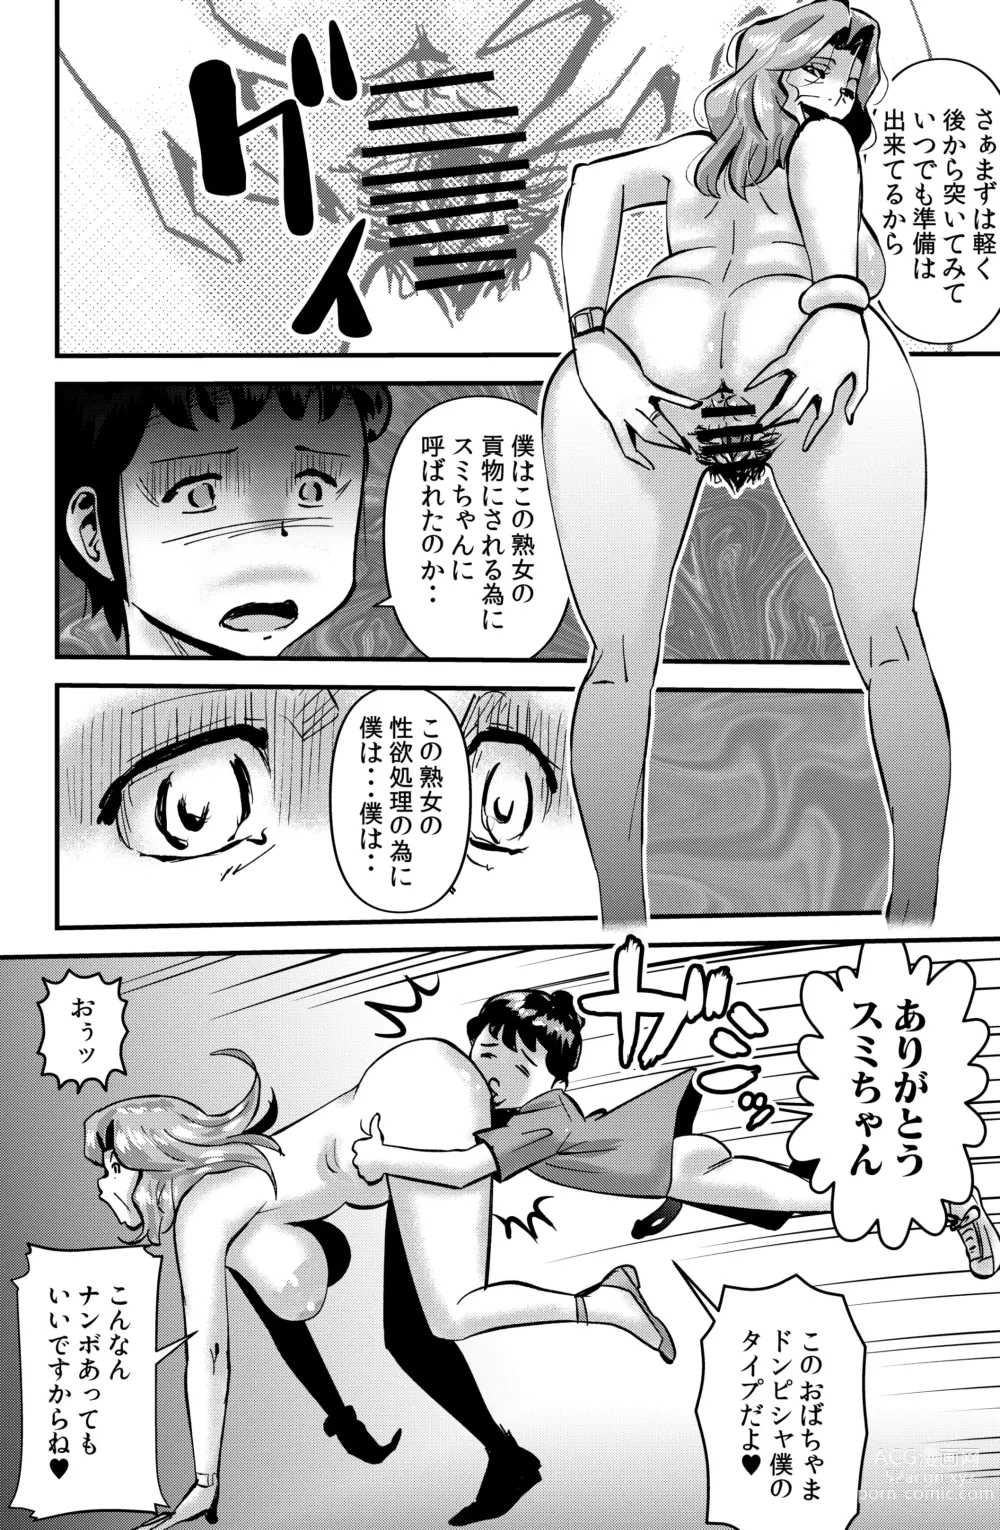 Page 14 of doujinshi Kazoku Camp 2